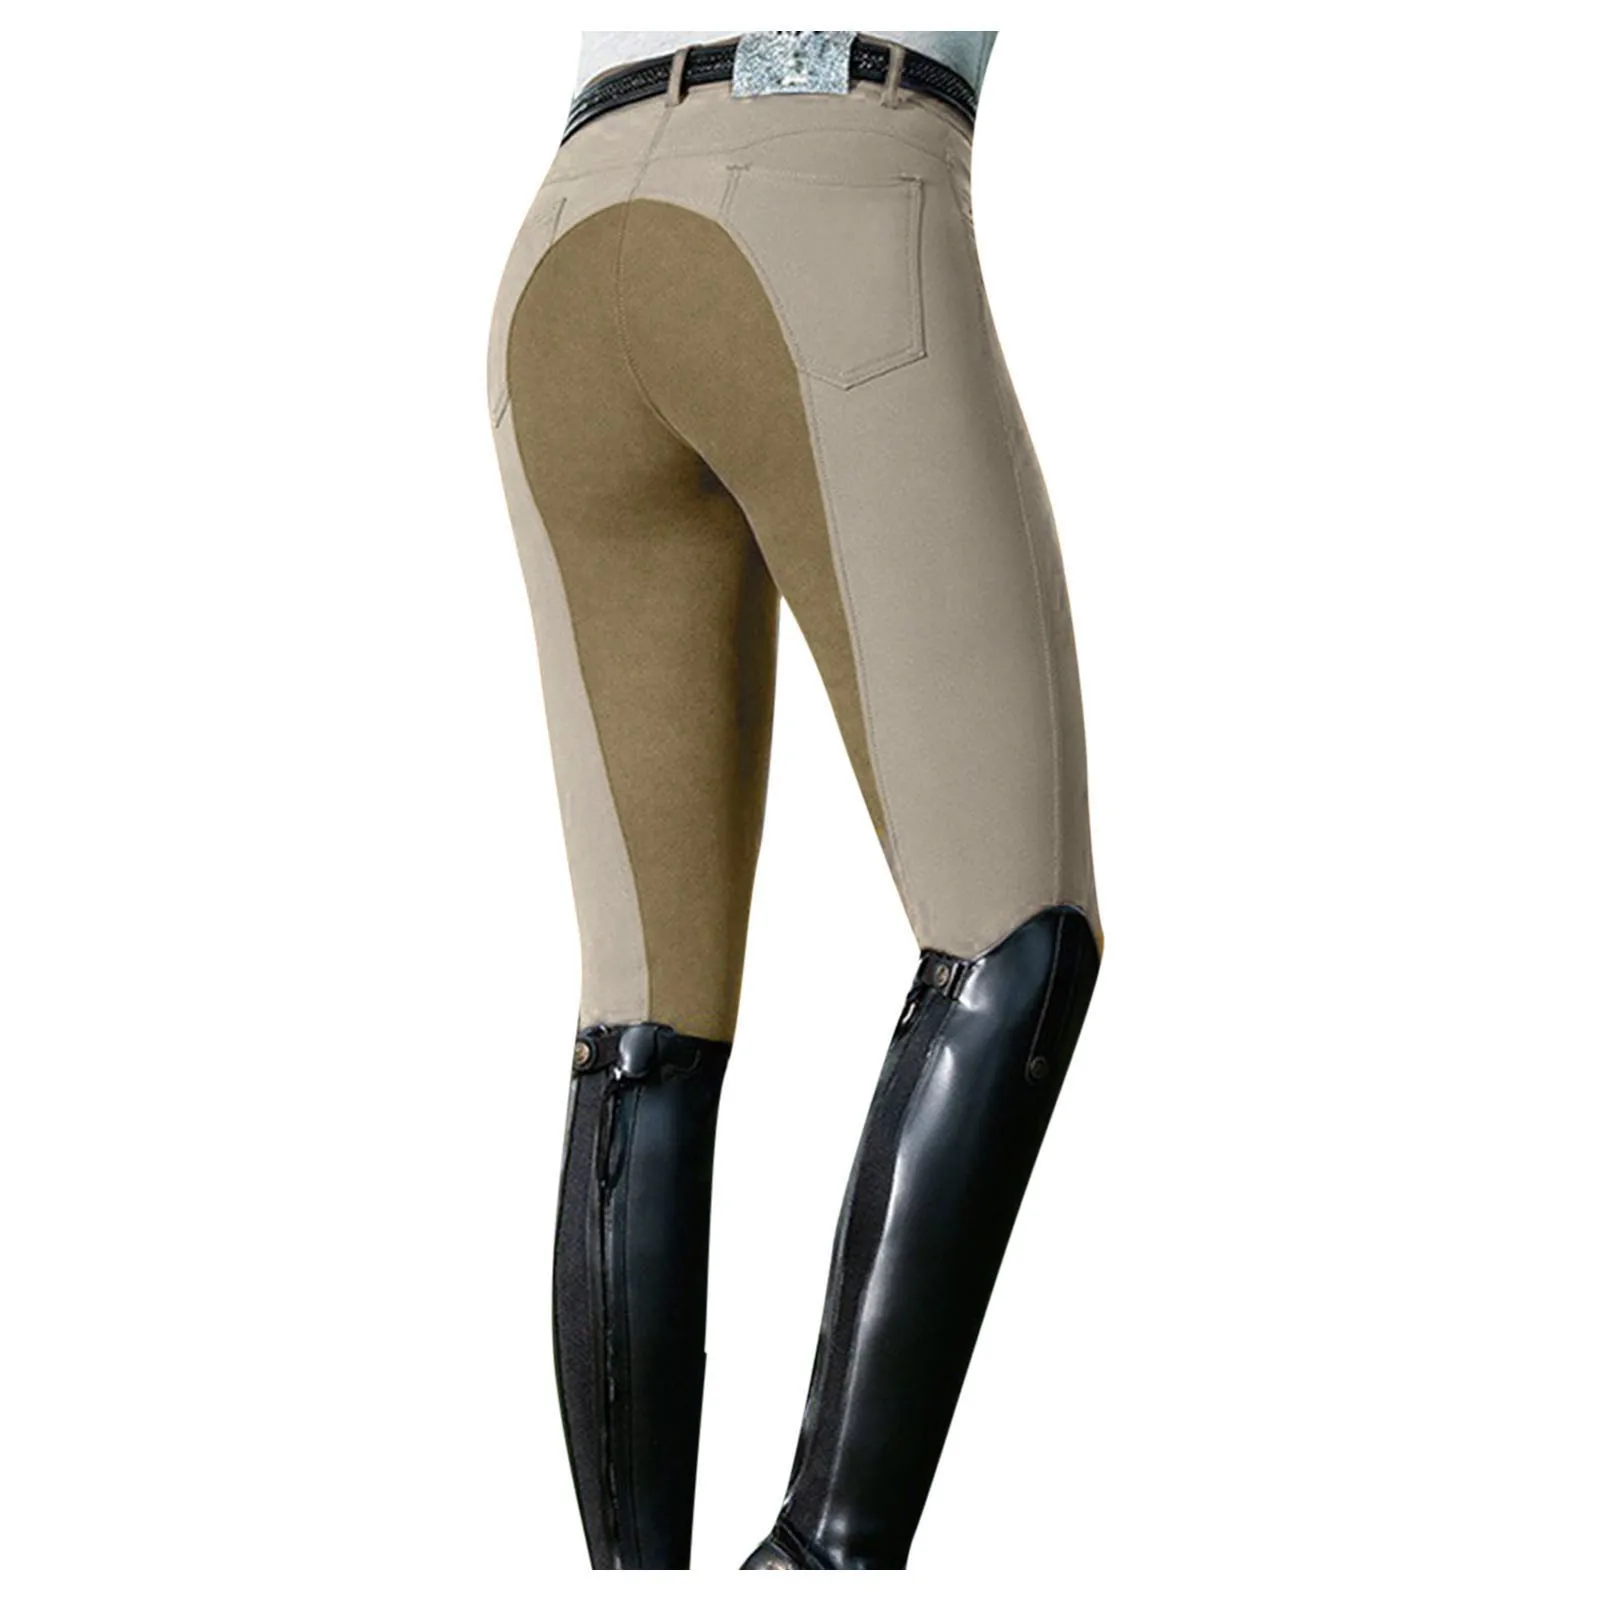 adidas pants 2021 Horse Riding Pants Unisex Fashion Casual Stretch Pants Cycling Leggings Equestrian Equipment Sports Breeches Rider Trouser champion sweatpants